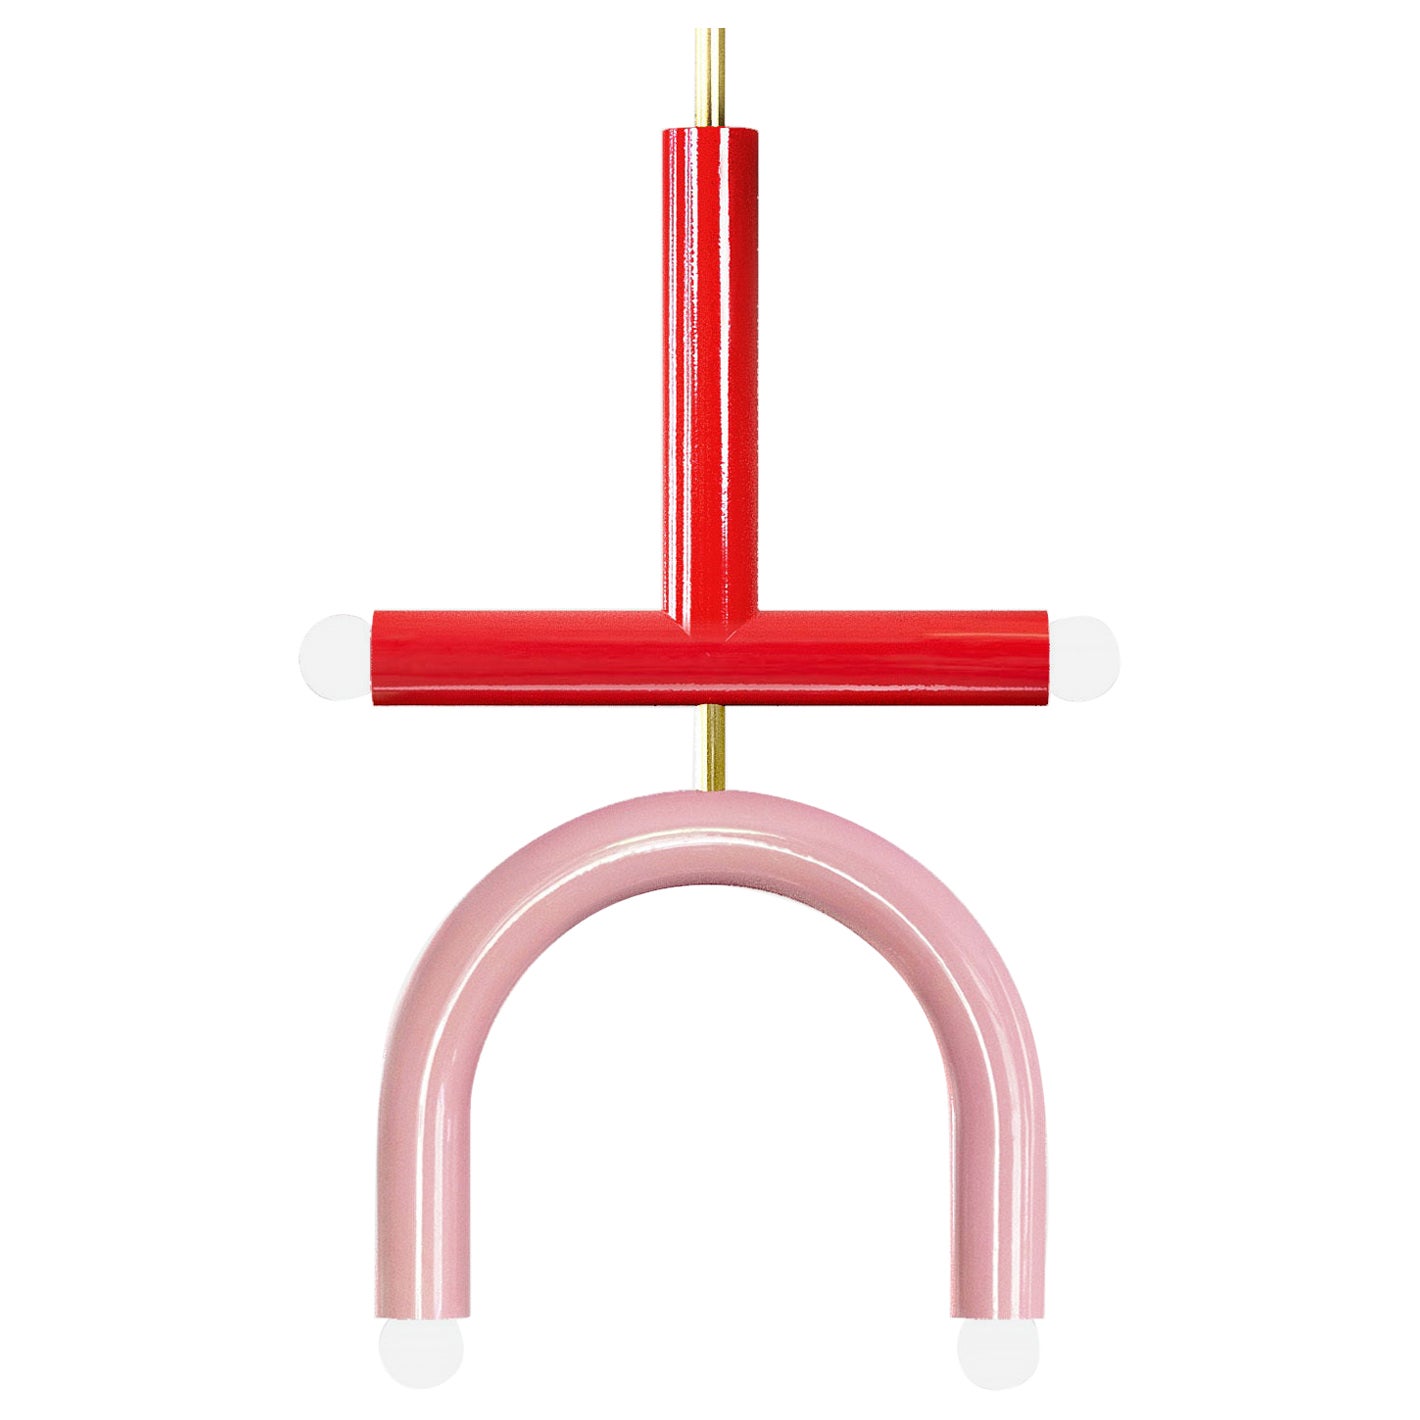 Ceramic Pendant Lamp 'TRN C2' by Pani Jurek, Red and Pink